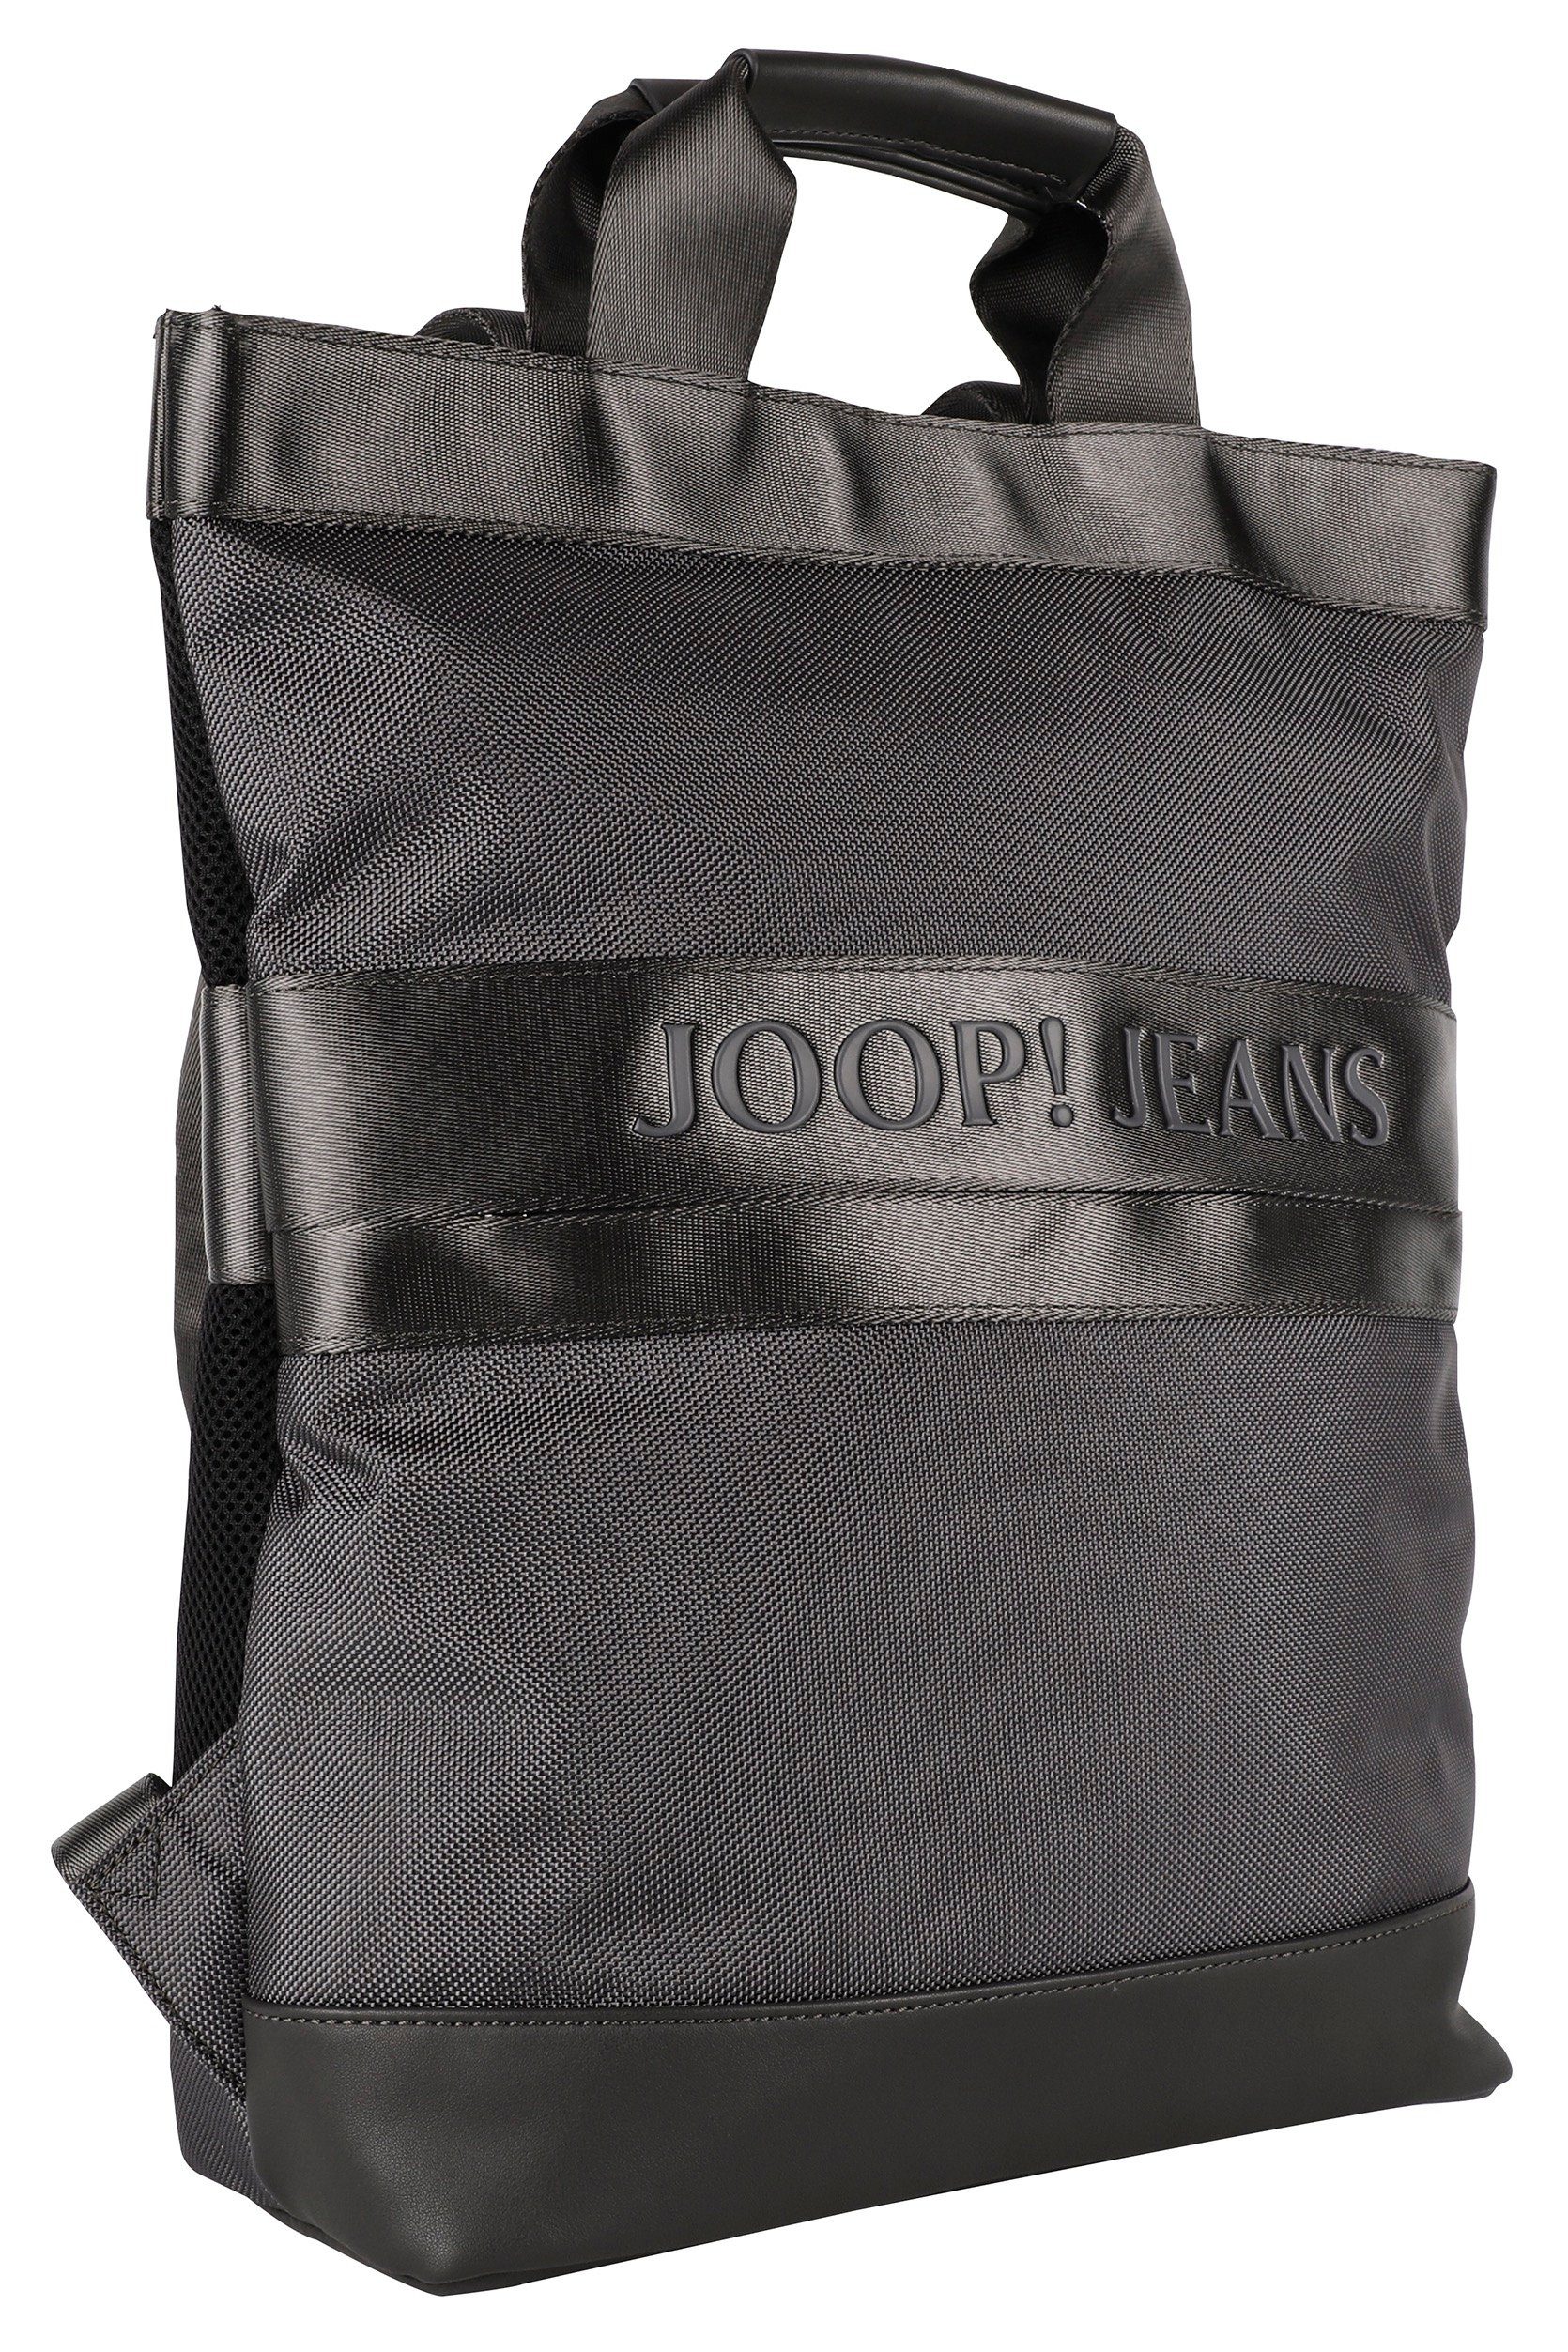 modica mit Reißverschluss-Vortasche dunkelgrau Cityrucksack falk Jeans Joop backpack svz,